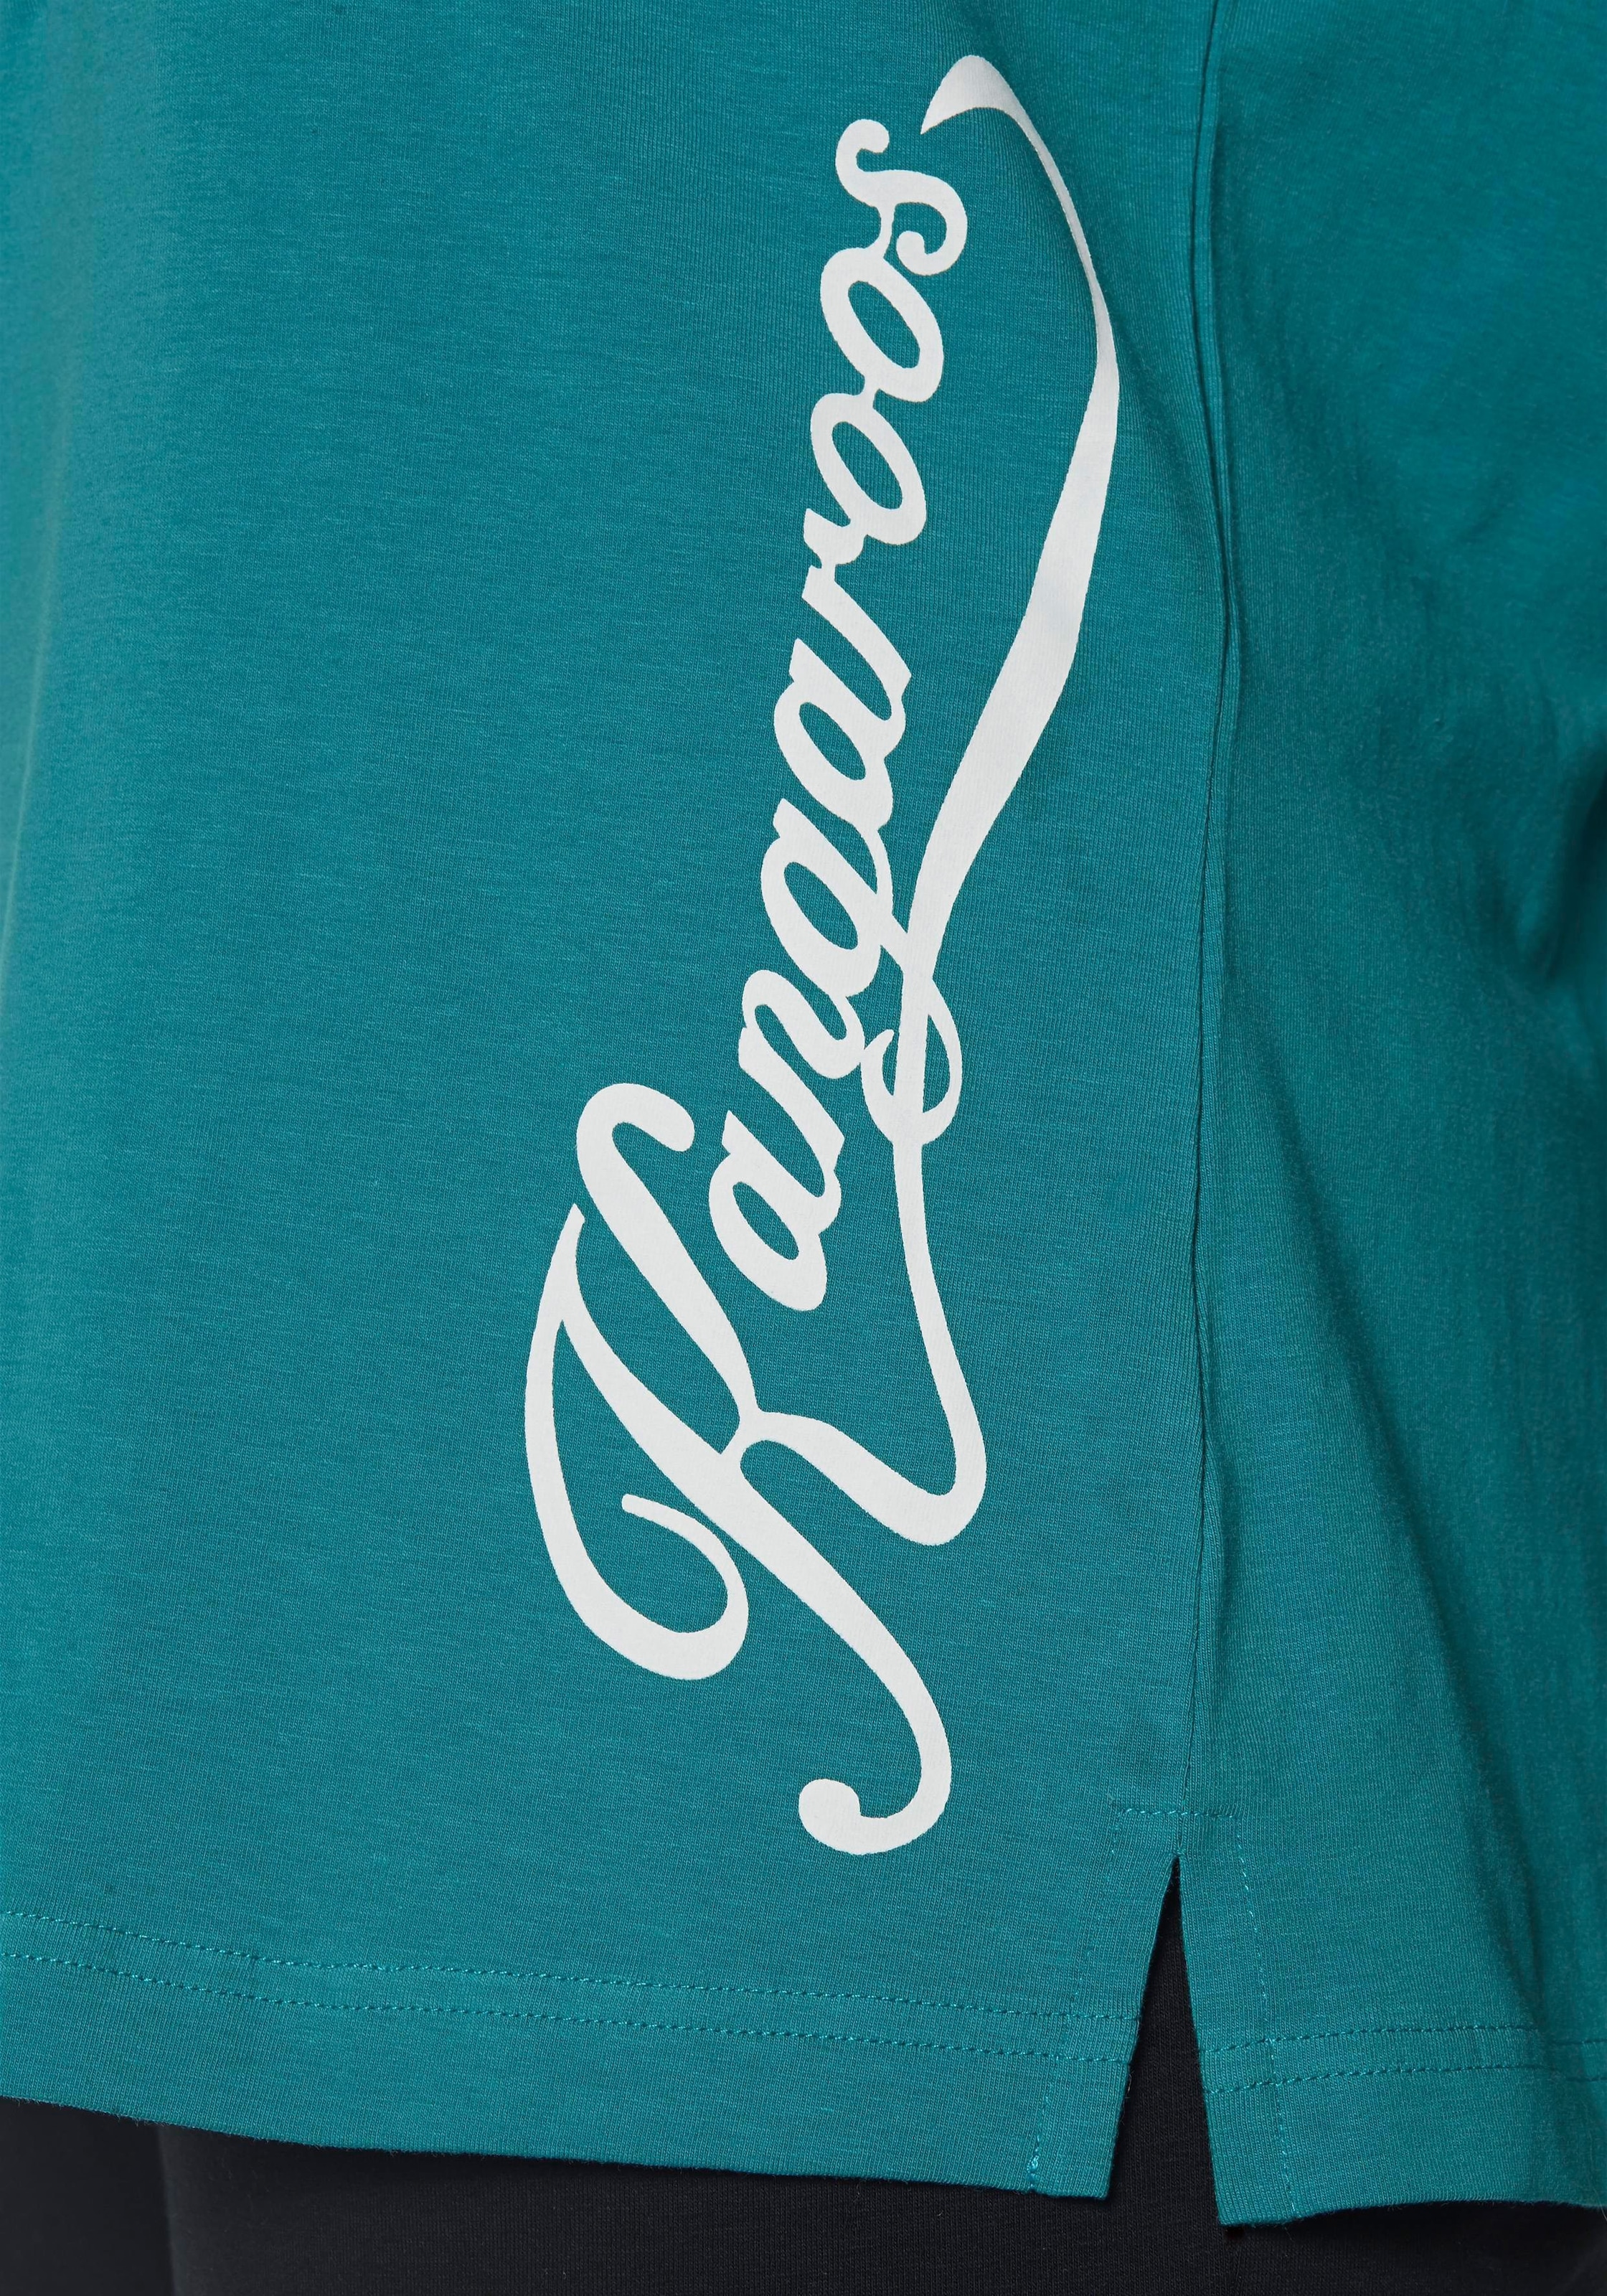 KangaROOS T-Shirt, Große Größen bestellen | BAUR